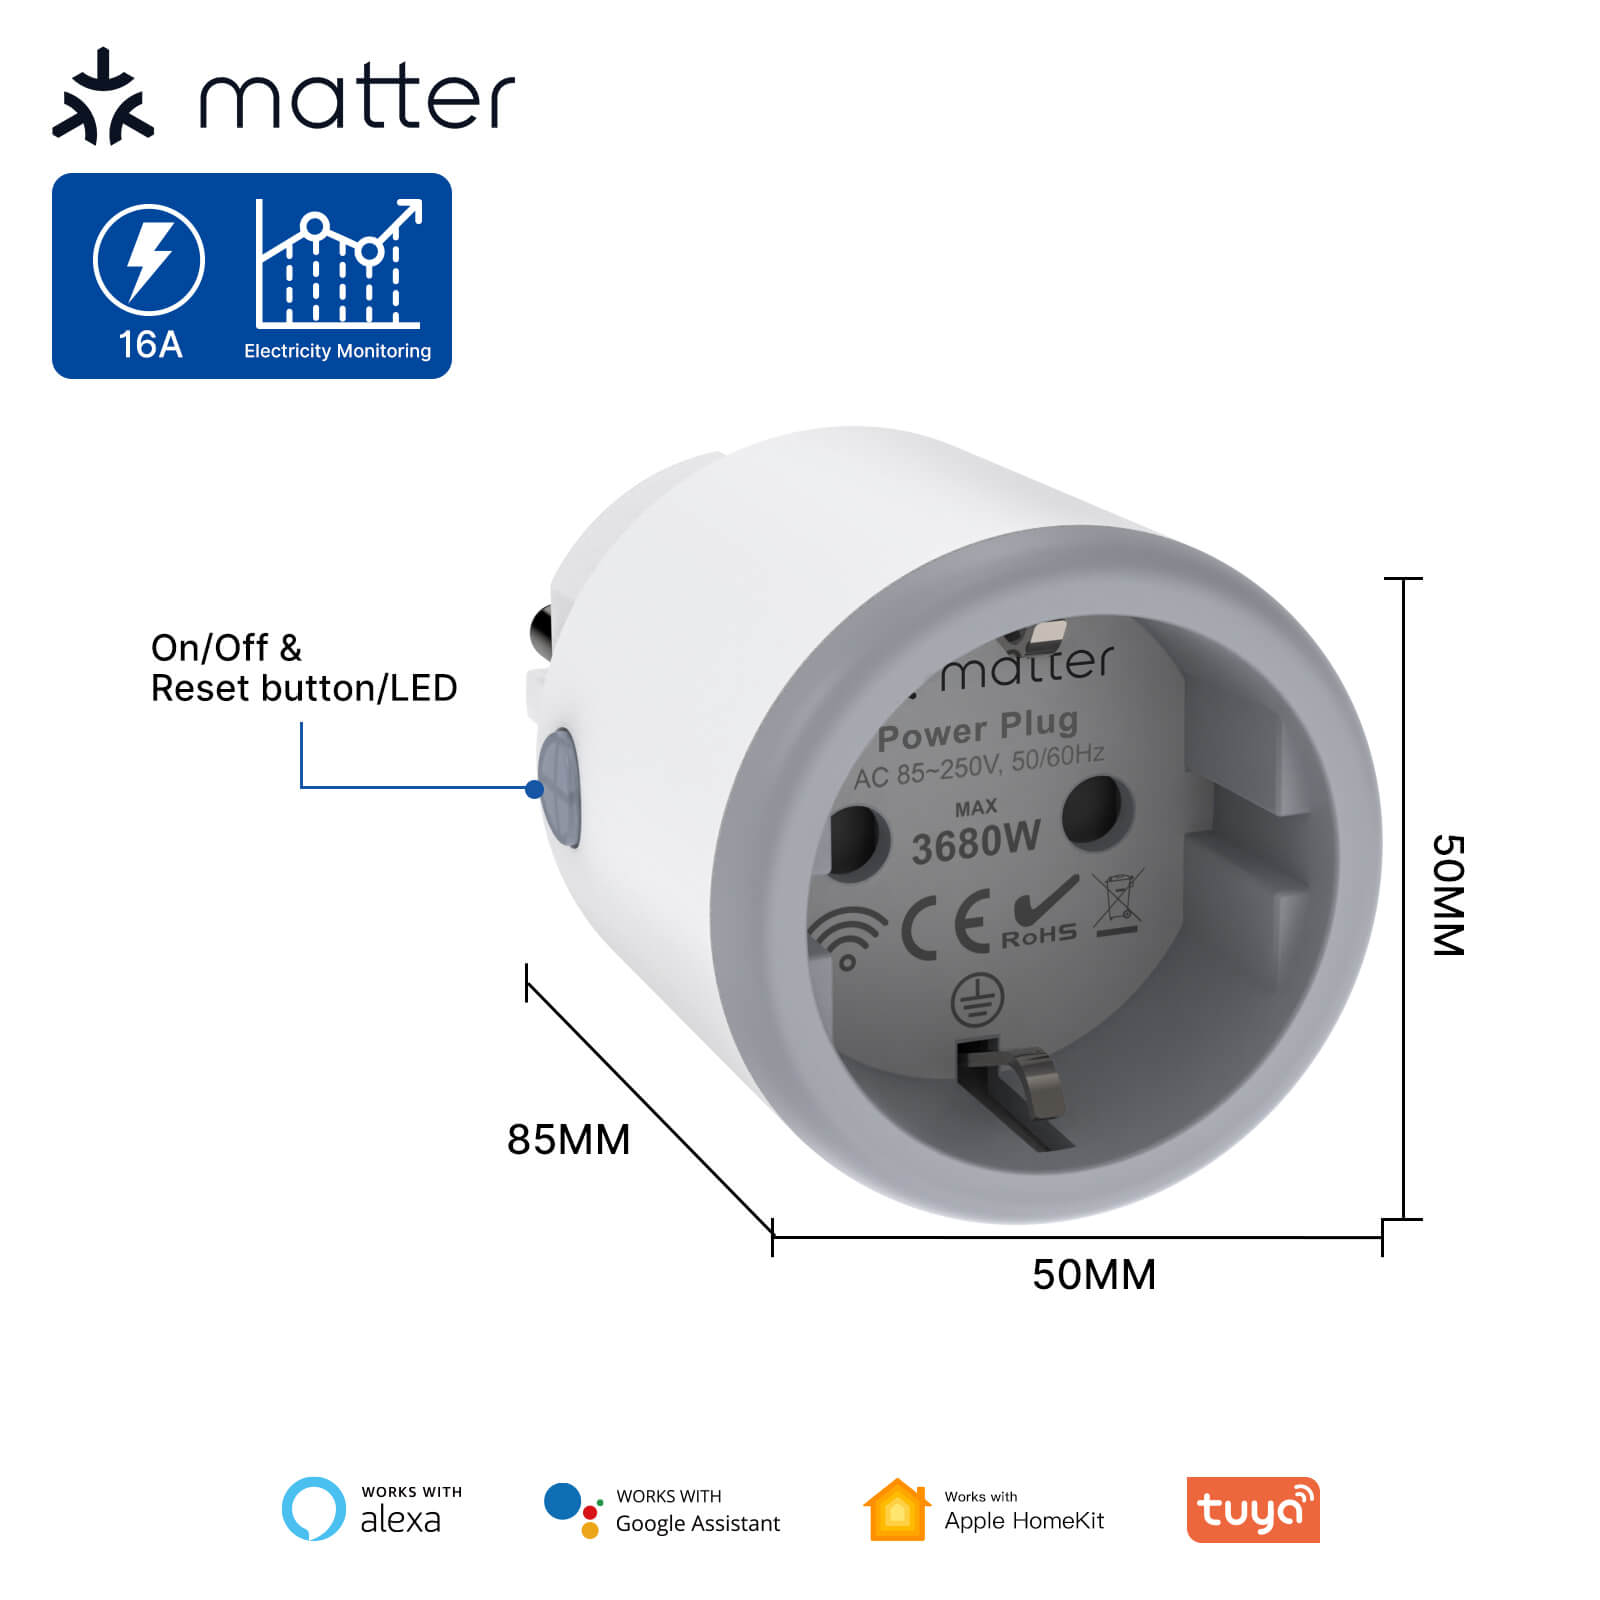 Matter and WiFi Smart plug with socket support Homekit, Smart Plugs